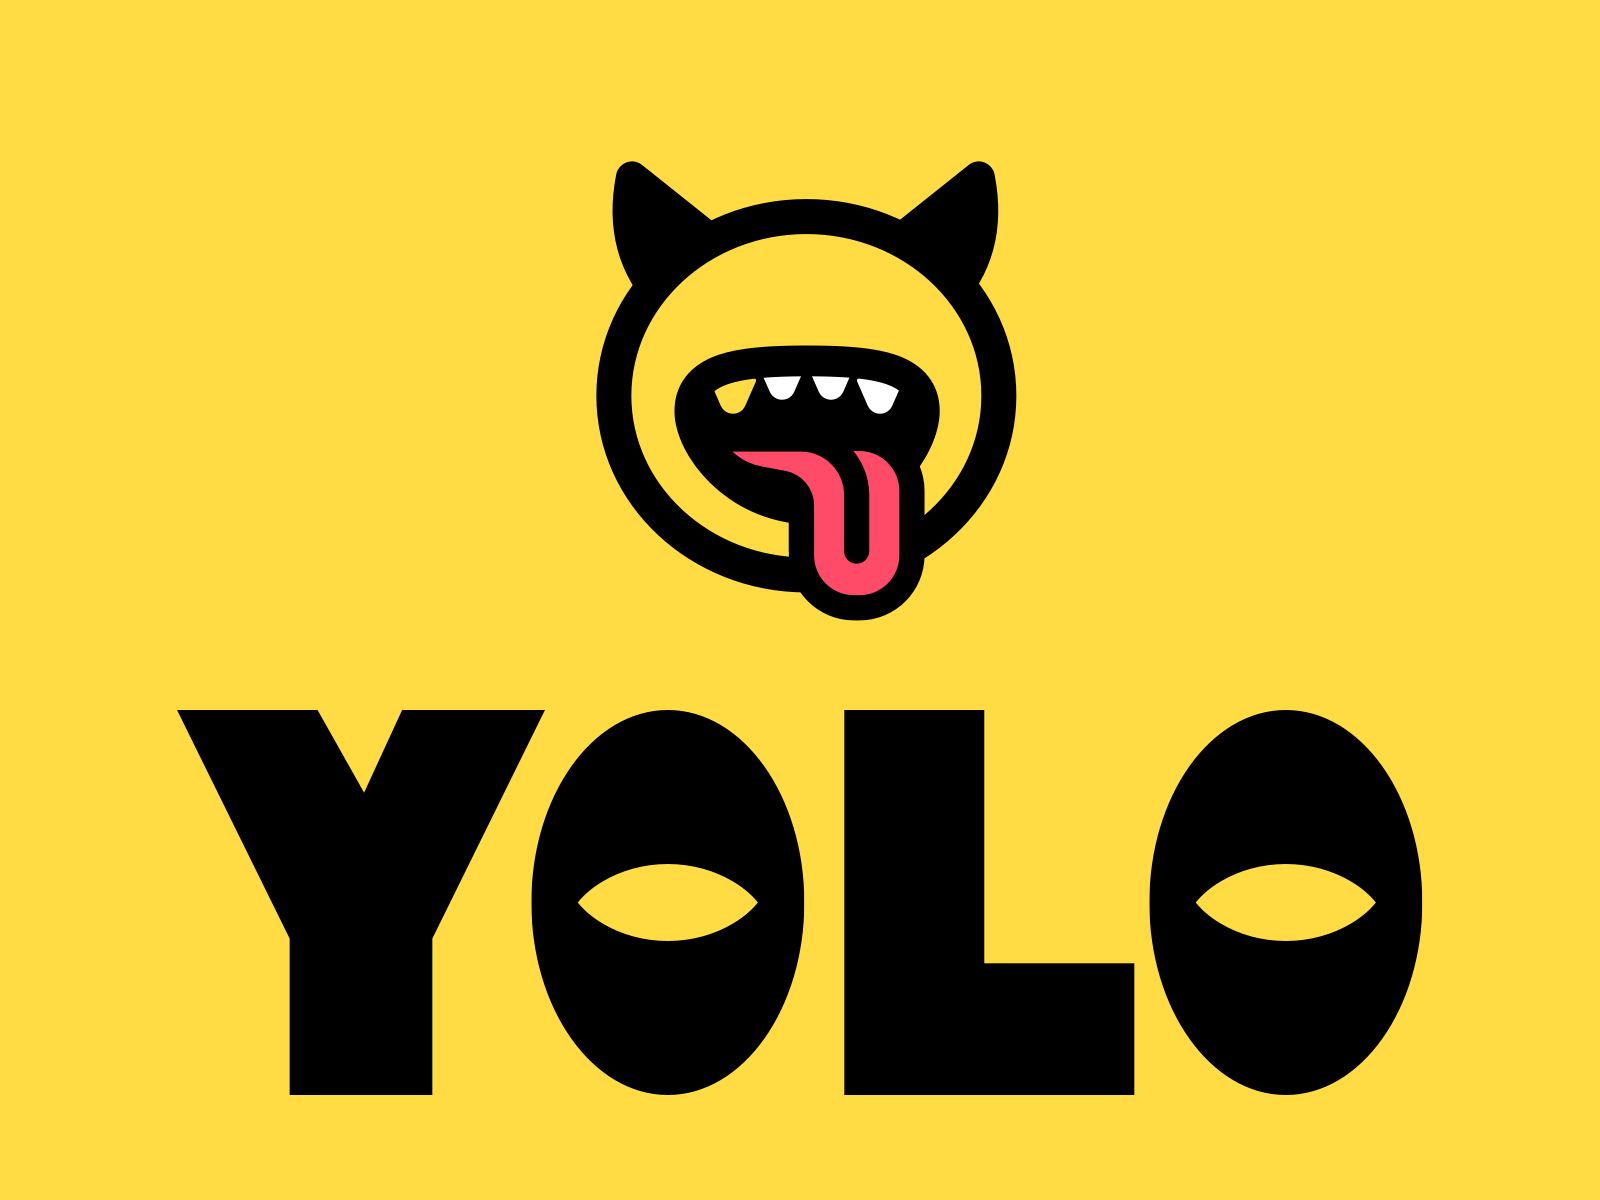 yolo logo wallpaper